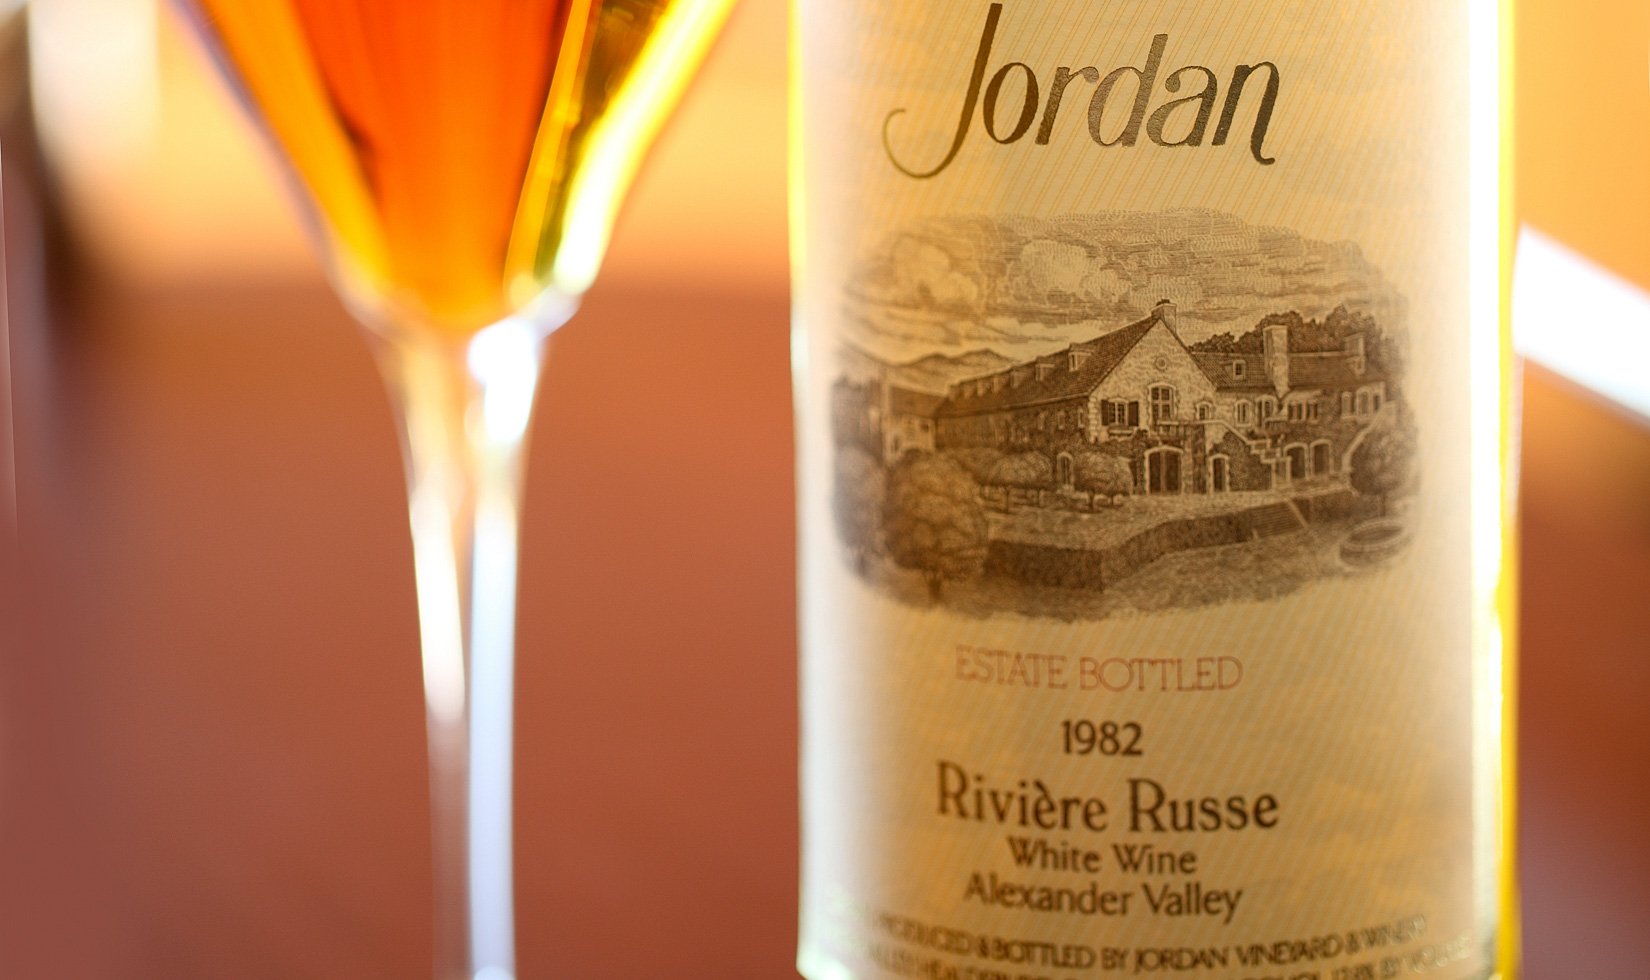 Jordan Riviere Russe dessert wine